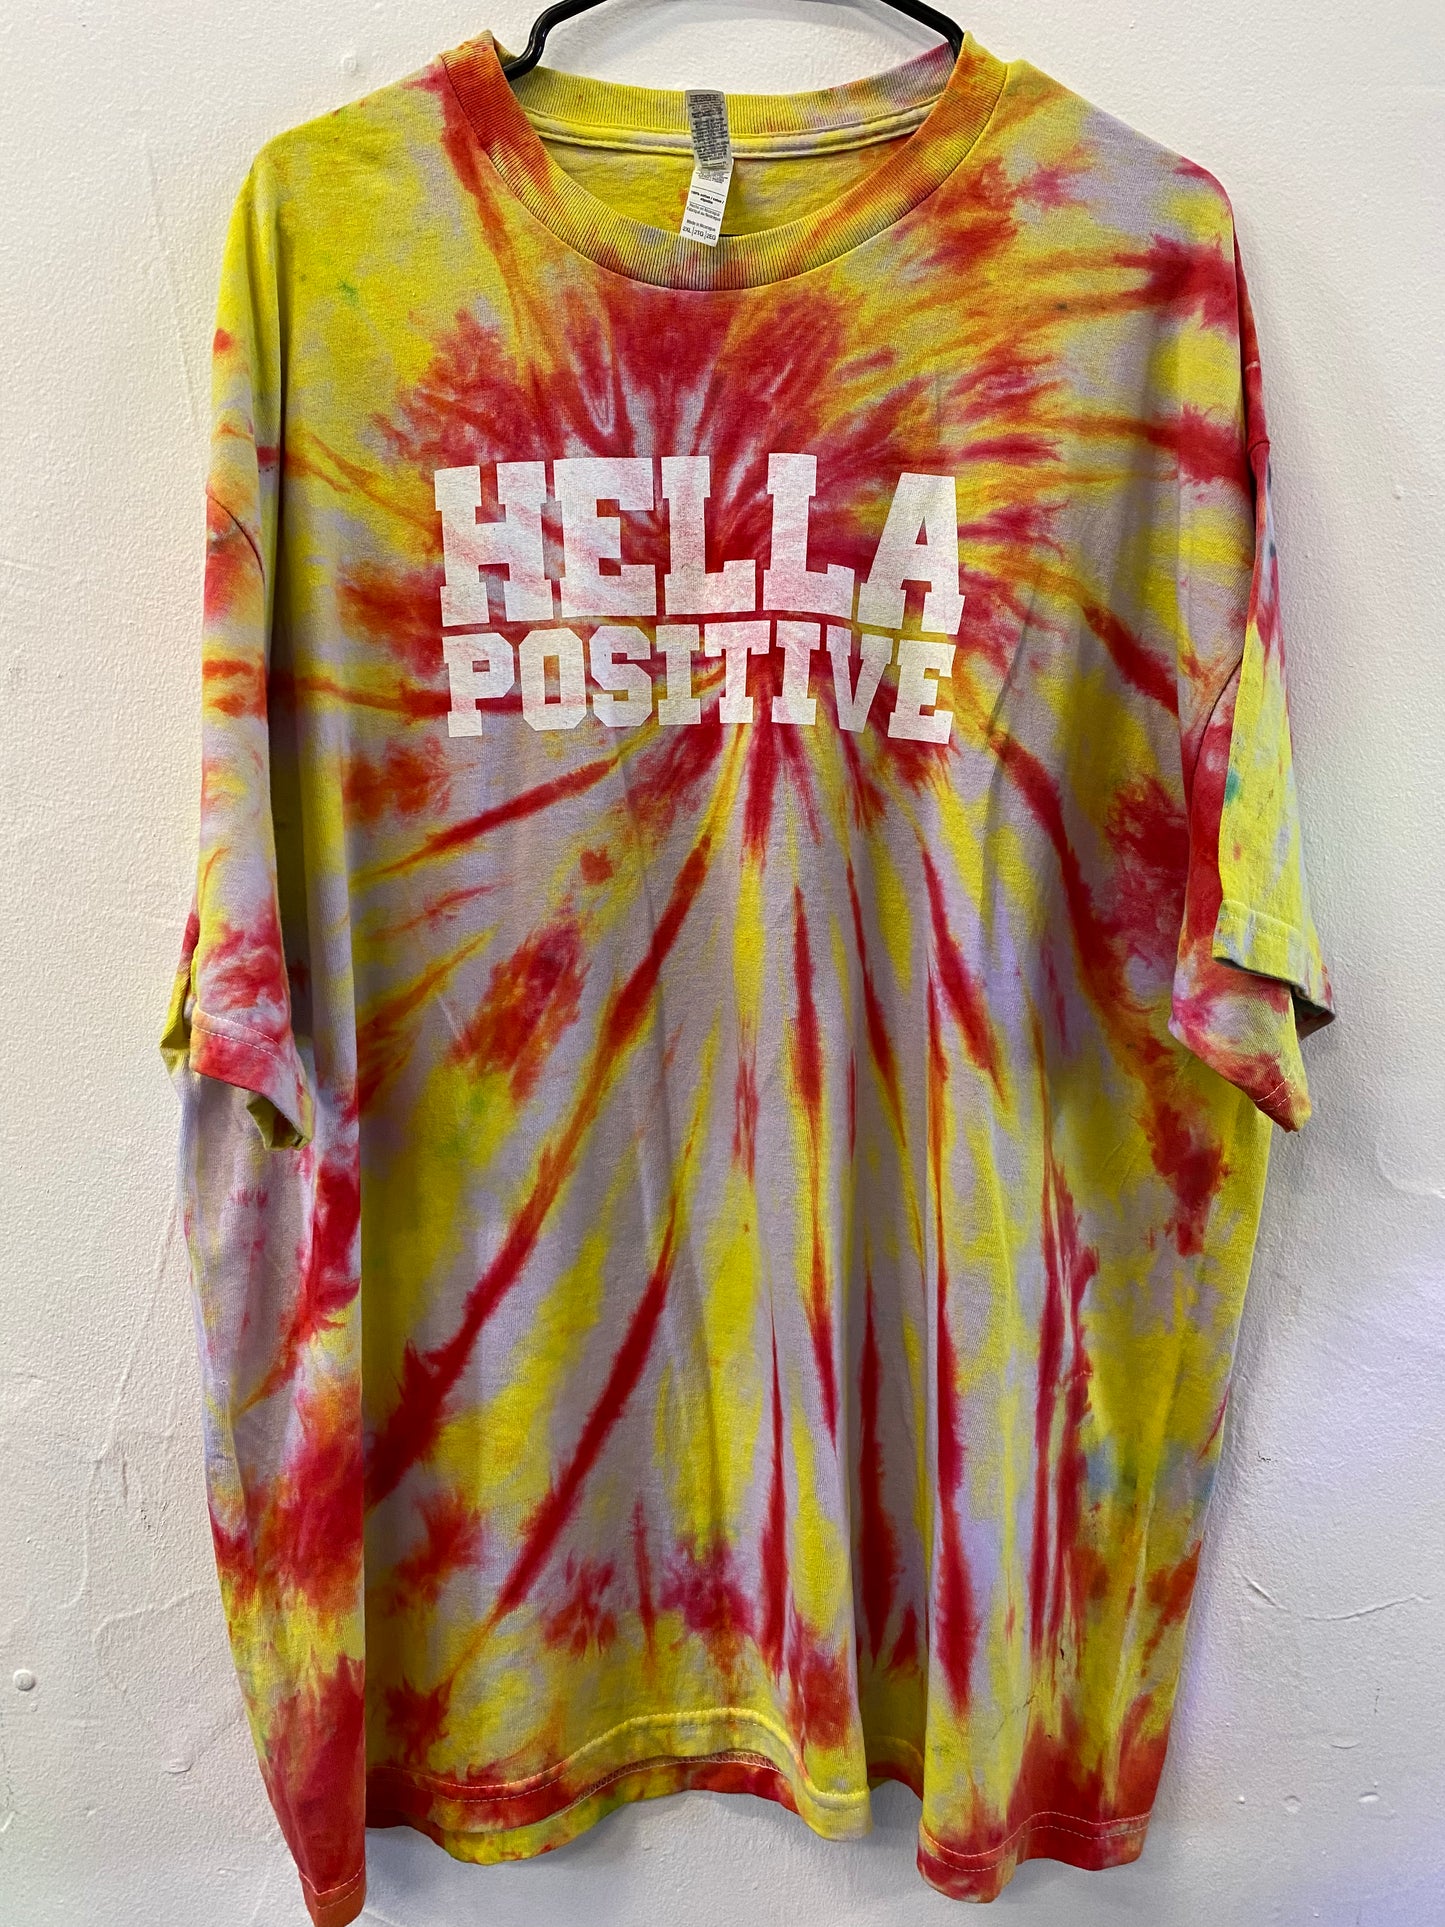 Hella Positive Tie Dye T shirt - 2XL